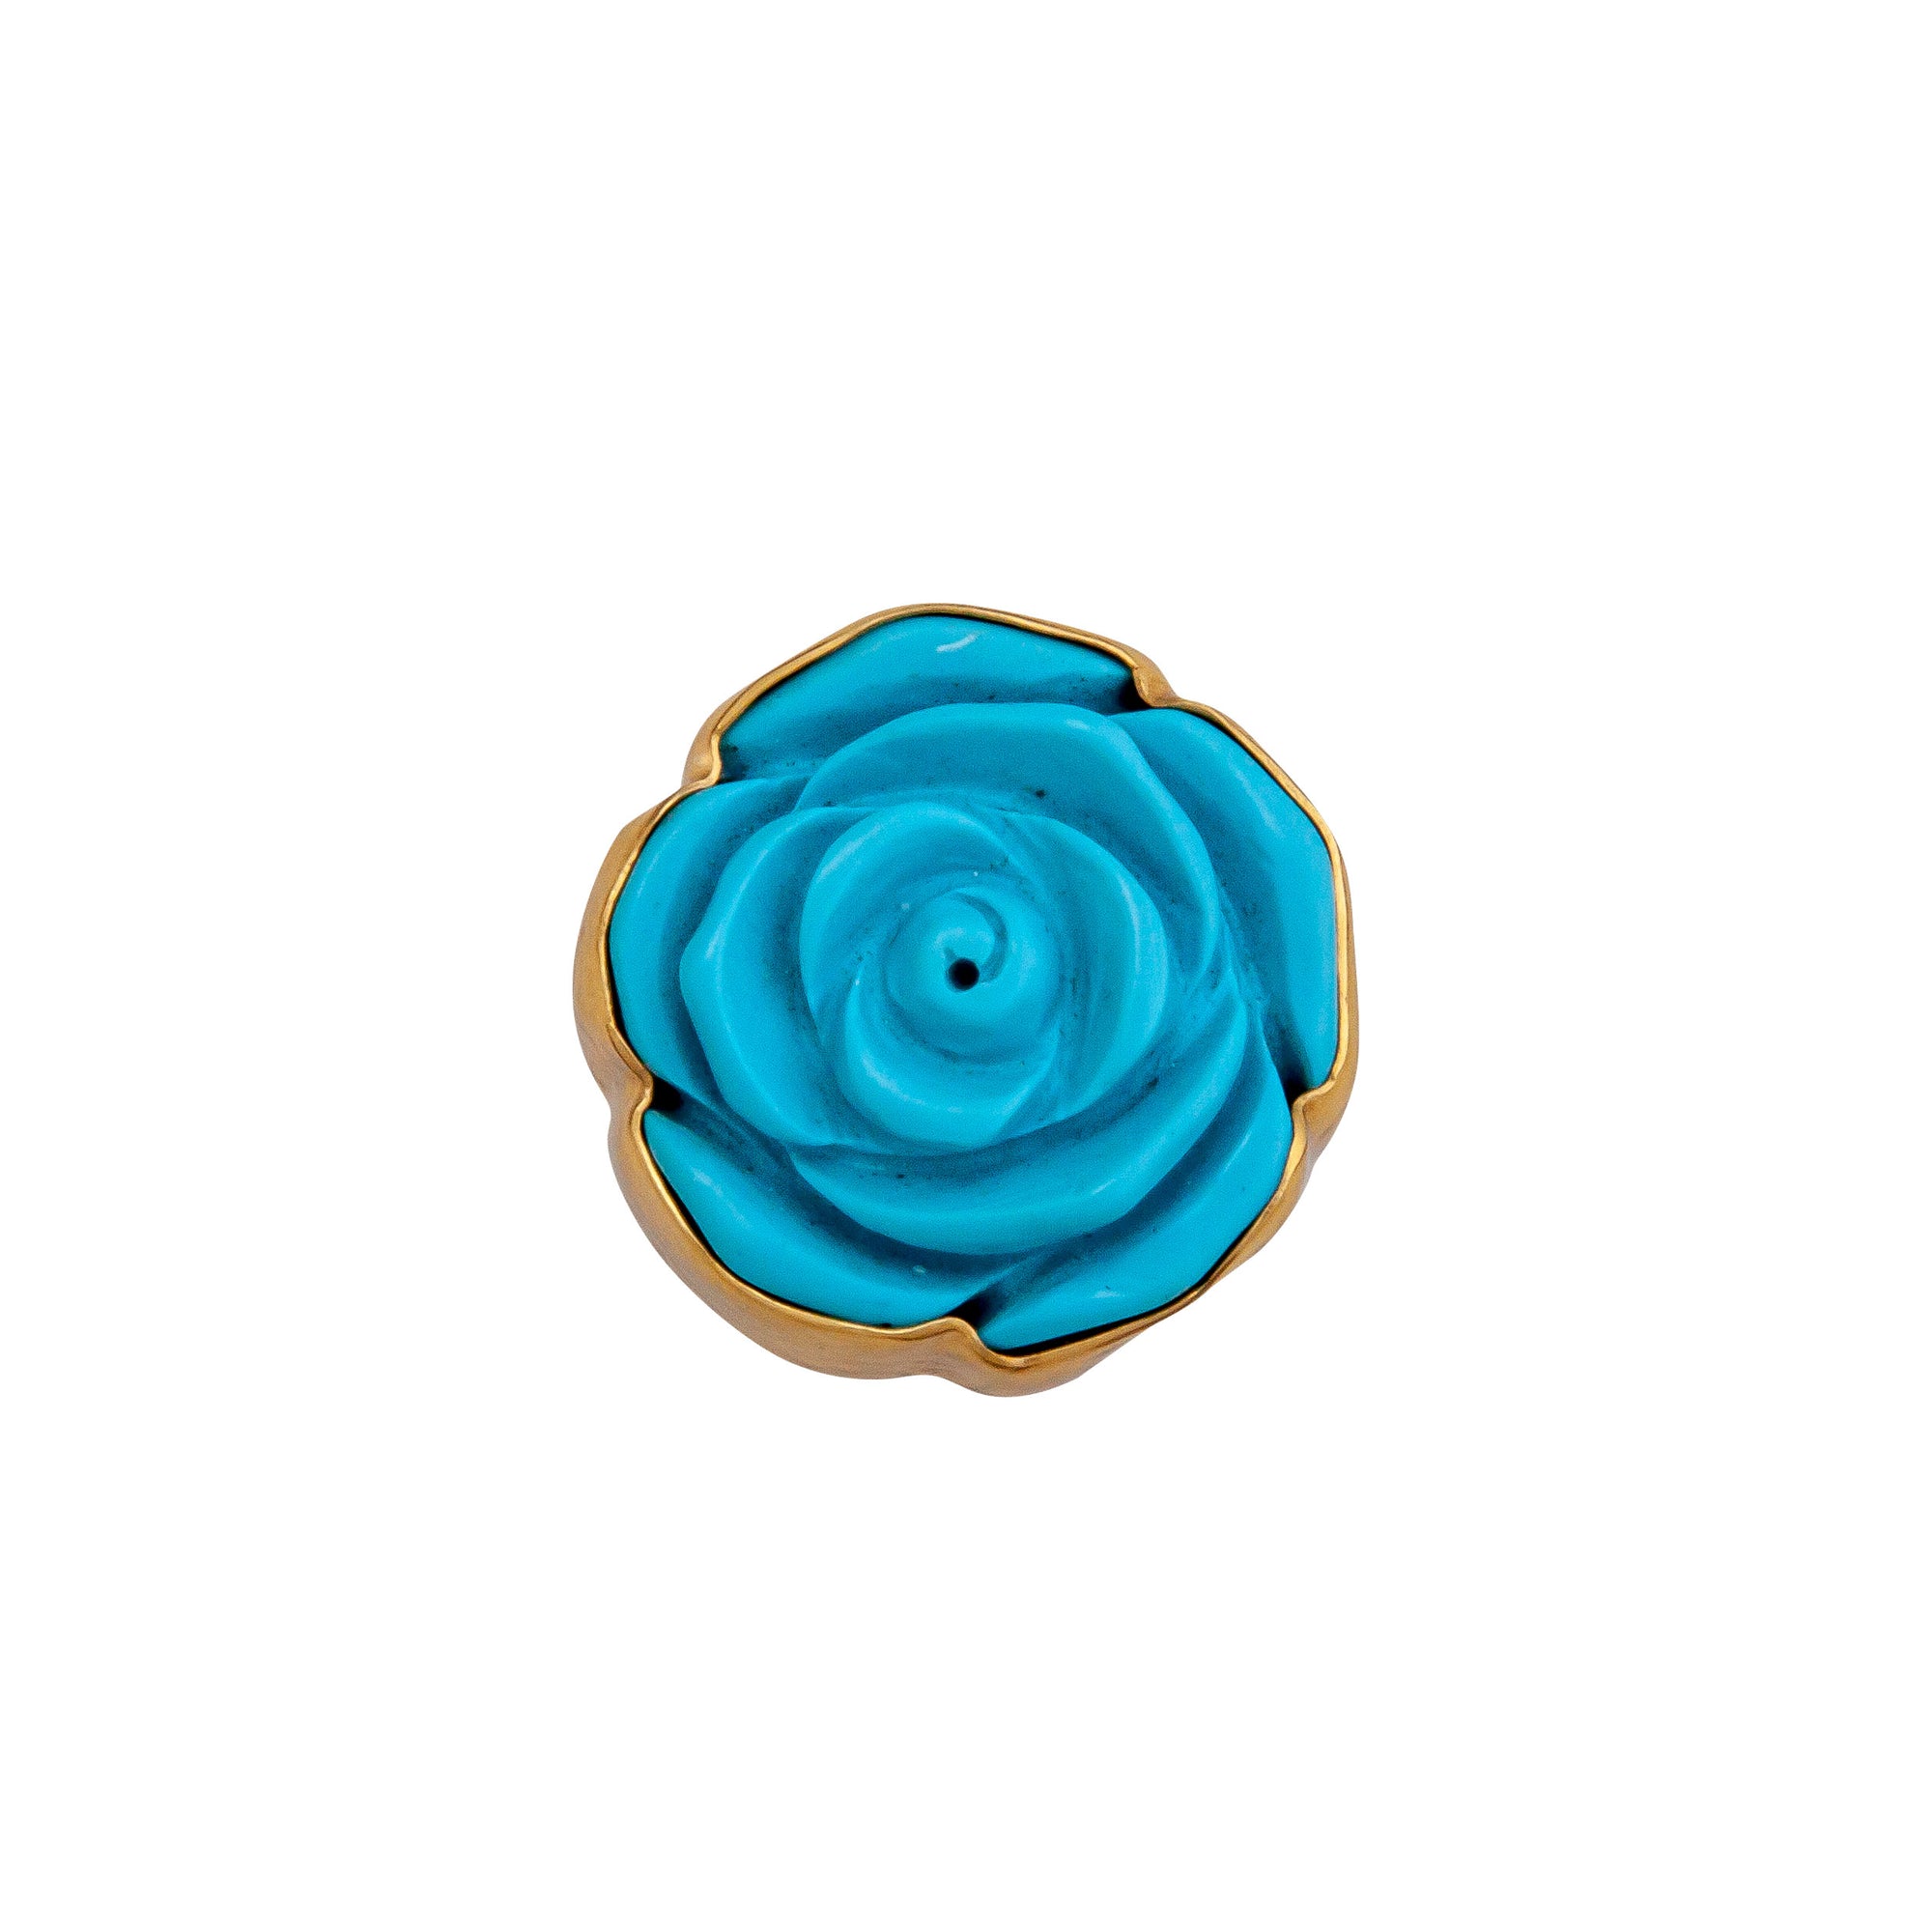 Alchemia Teal Blue Resin Rose Adjustable Ring | Charles Albert Jewelry